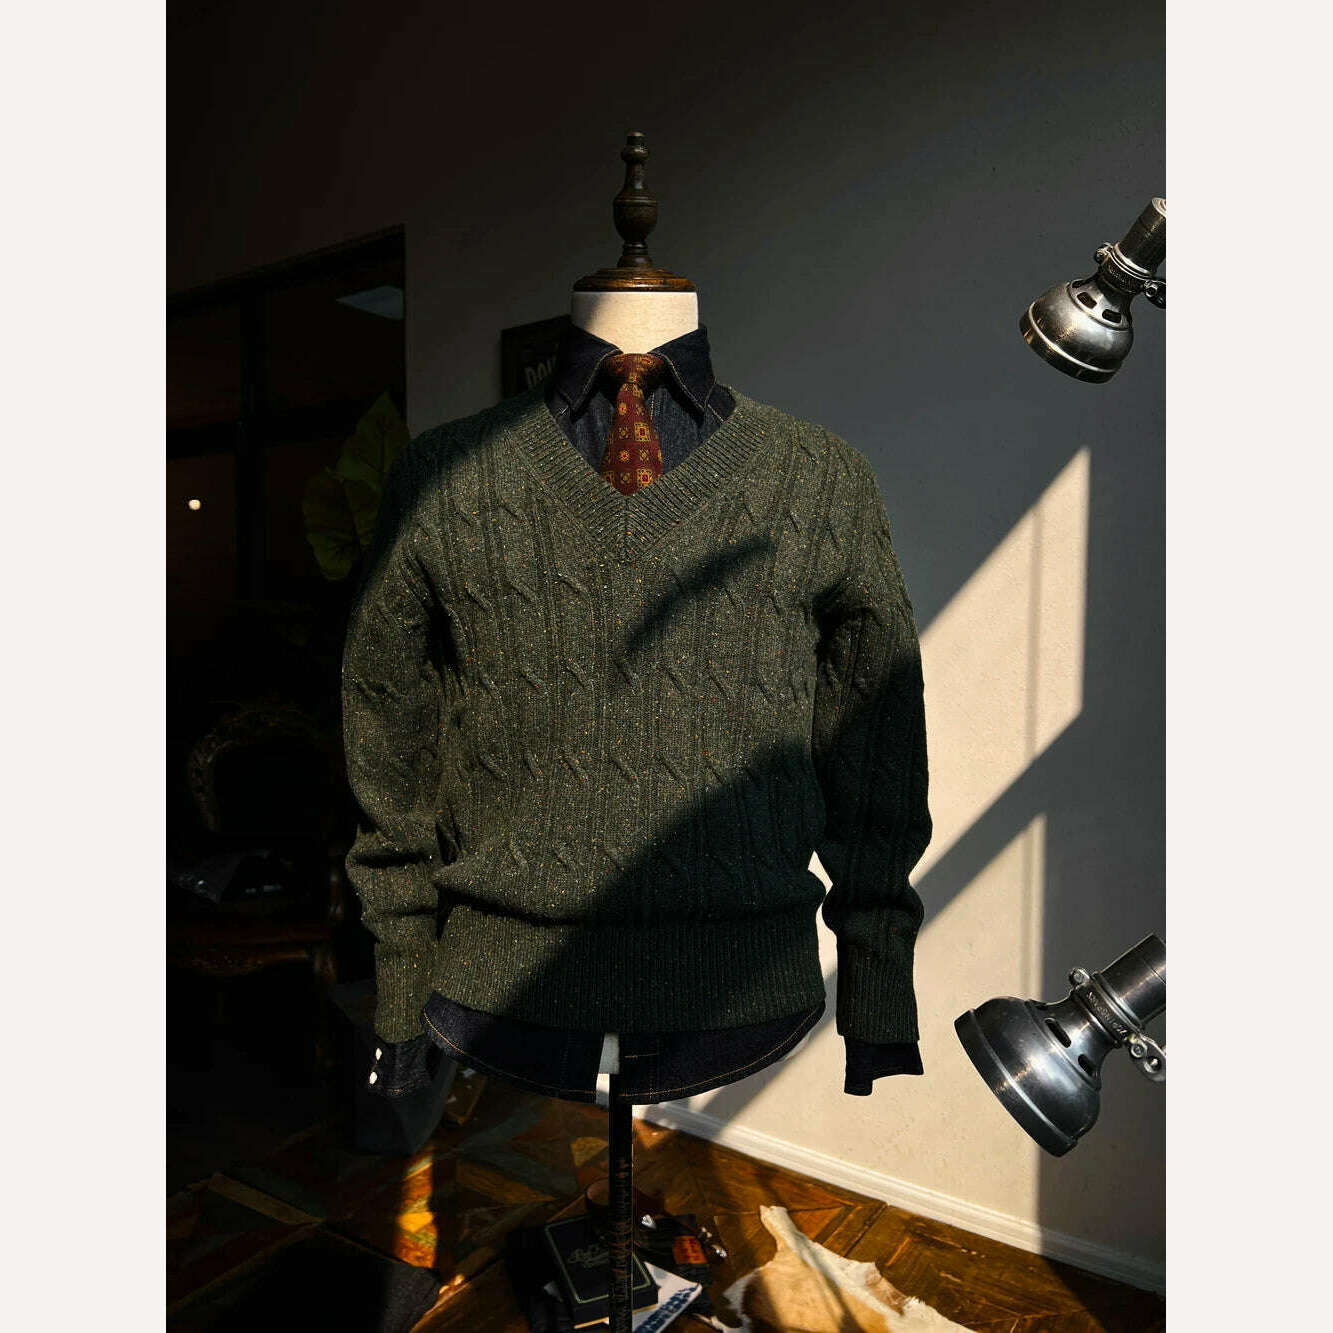 Tailor Brando Vintage V-Neck Aran Sweater 80% Australian Wool Knit Twisted Knit Pullover Sweater, KIMLUD Women's Clothes